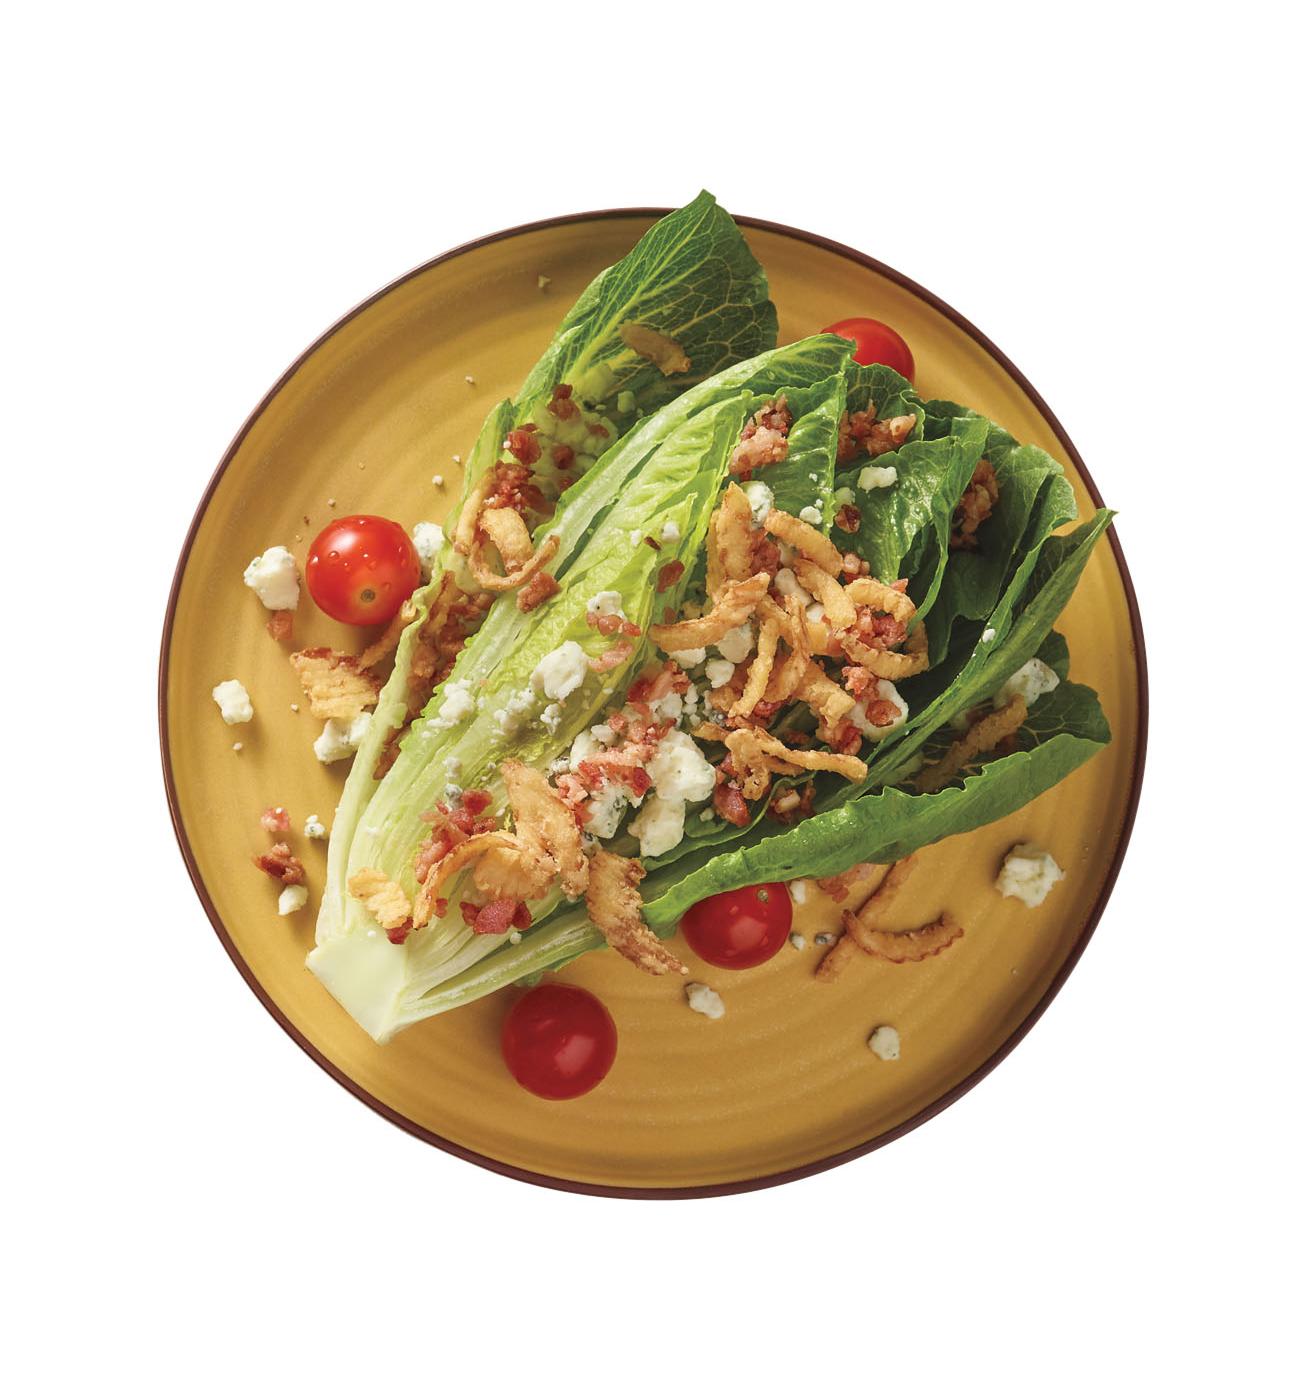 H-E-B Chopped Salad Bowl - Wedge Style